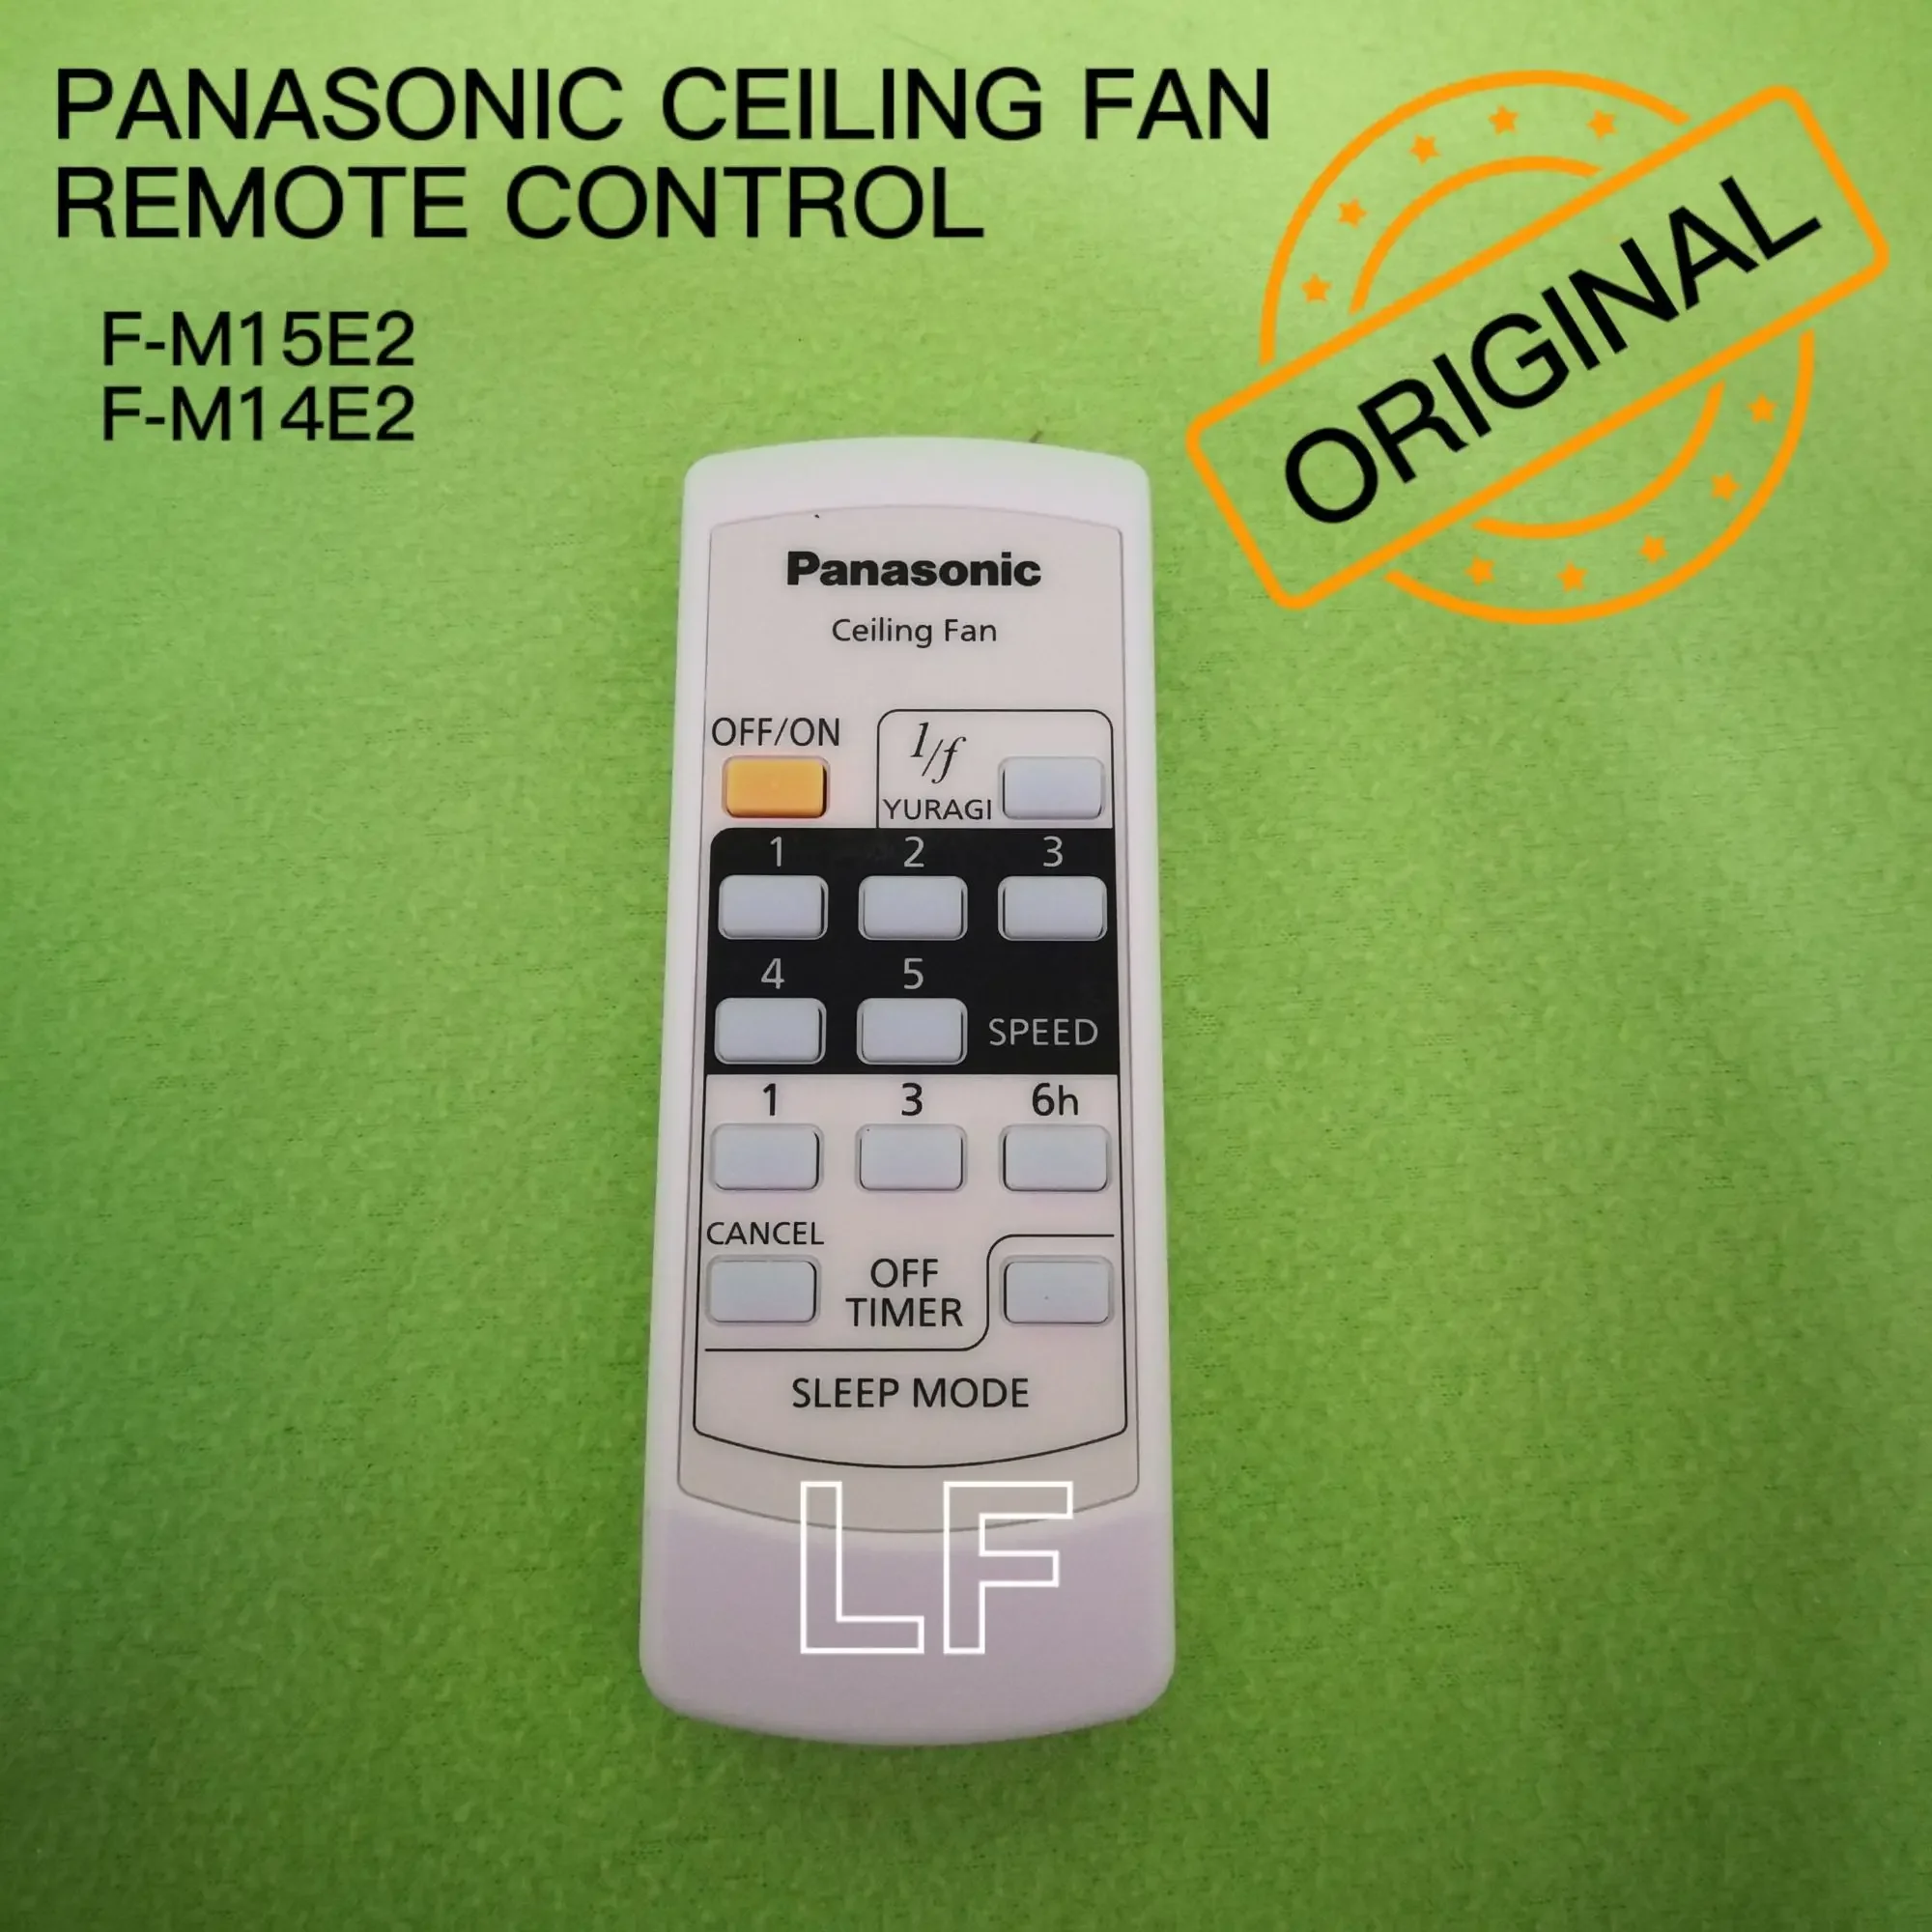 KDK / Panasonic Original Ceiling Fan Remote Control K14Y2 / K15Y2 Use for F-M15E2, F-M14E2